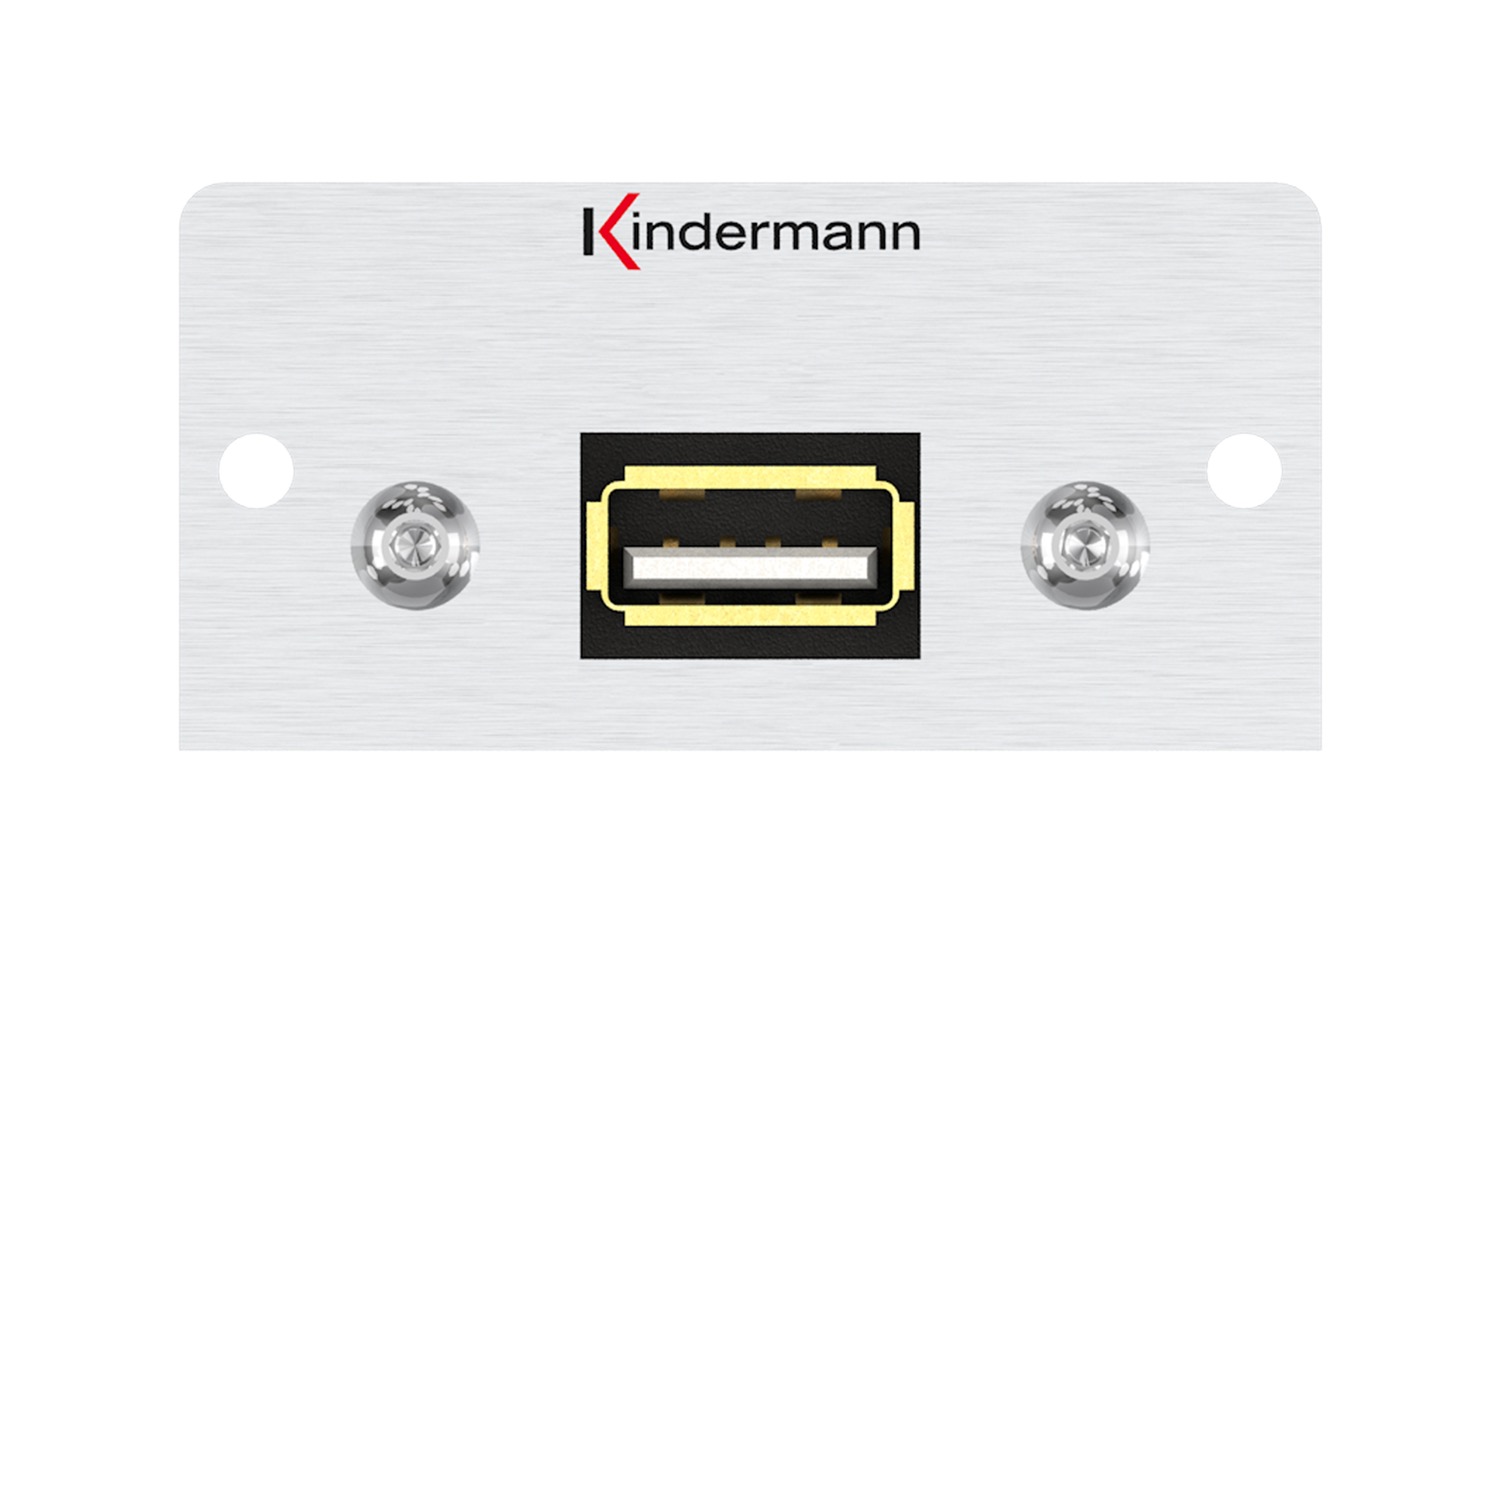 Kindermann Konnect alu 50 - USB 2.0 (TypA) - Anschlussblende mit Kabelpeitsche, USB 2.0 A-Buchse/ A-Buchse, Halbblende, Aluminium eloxiert